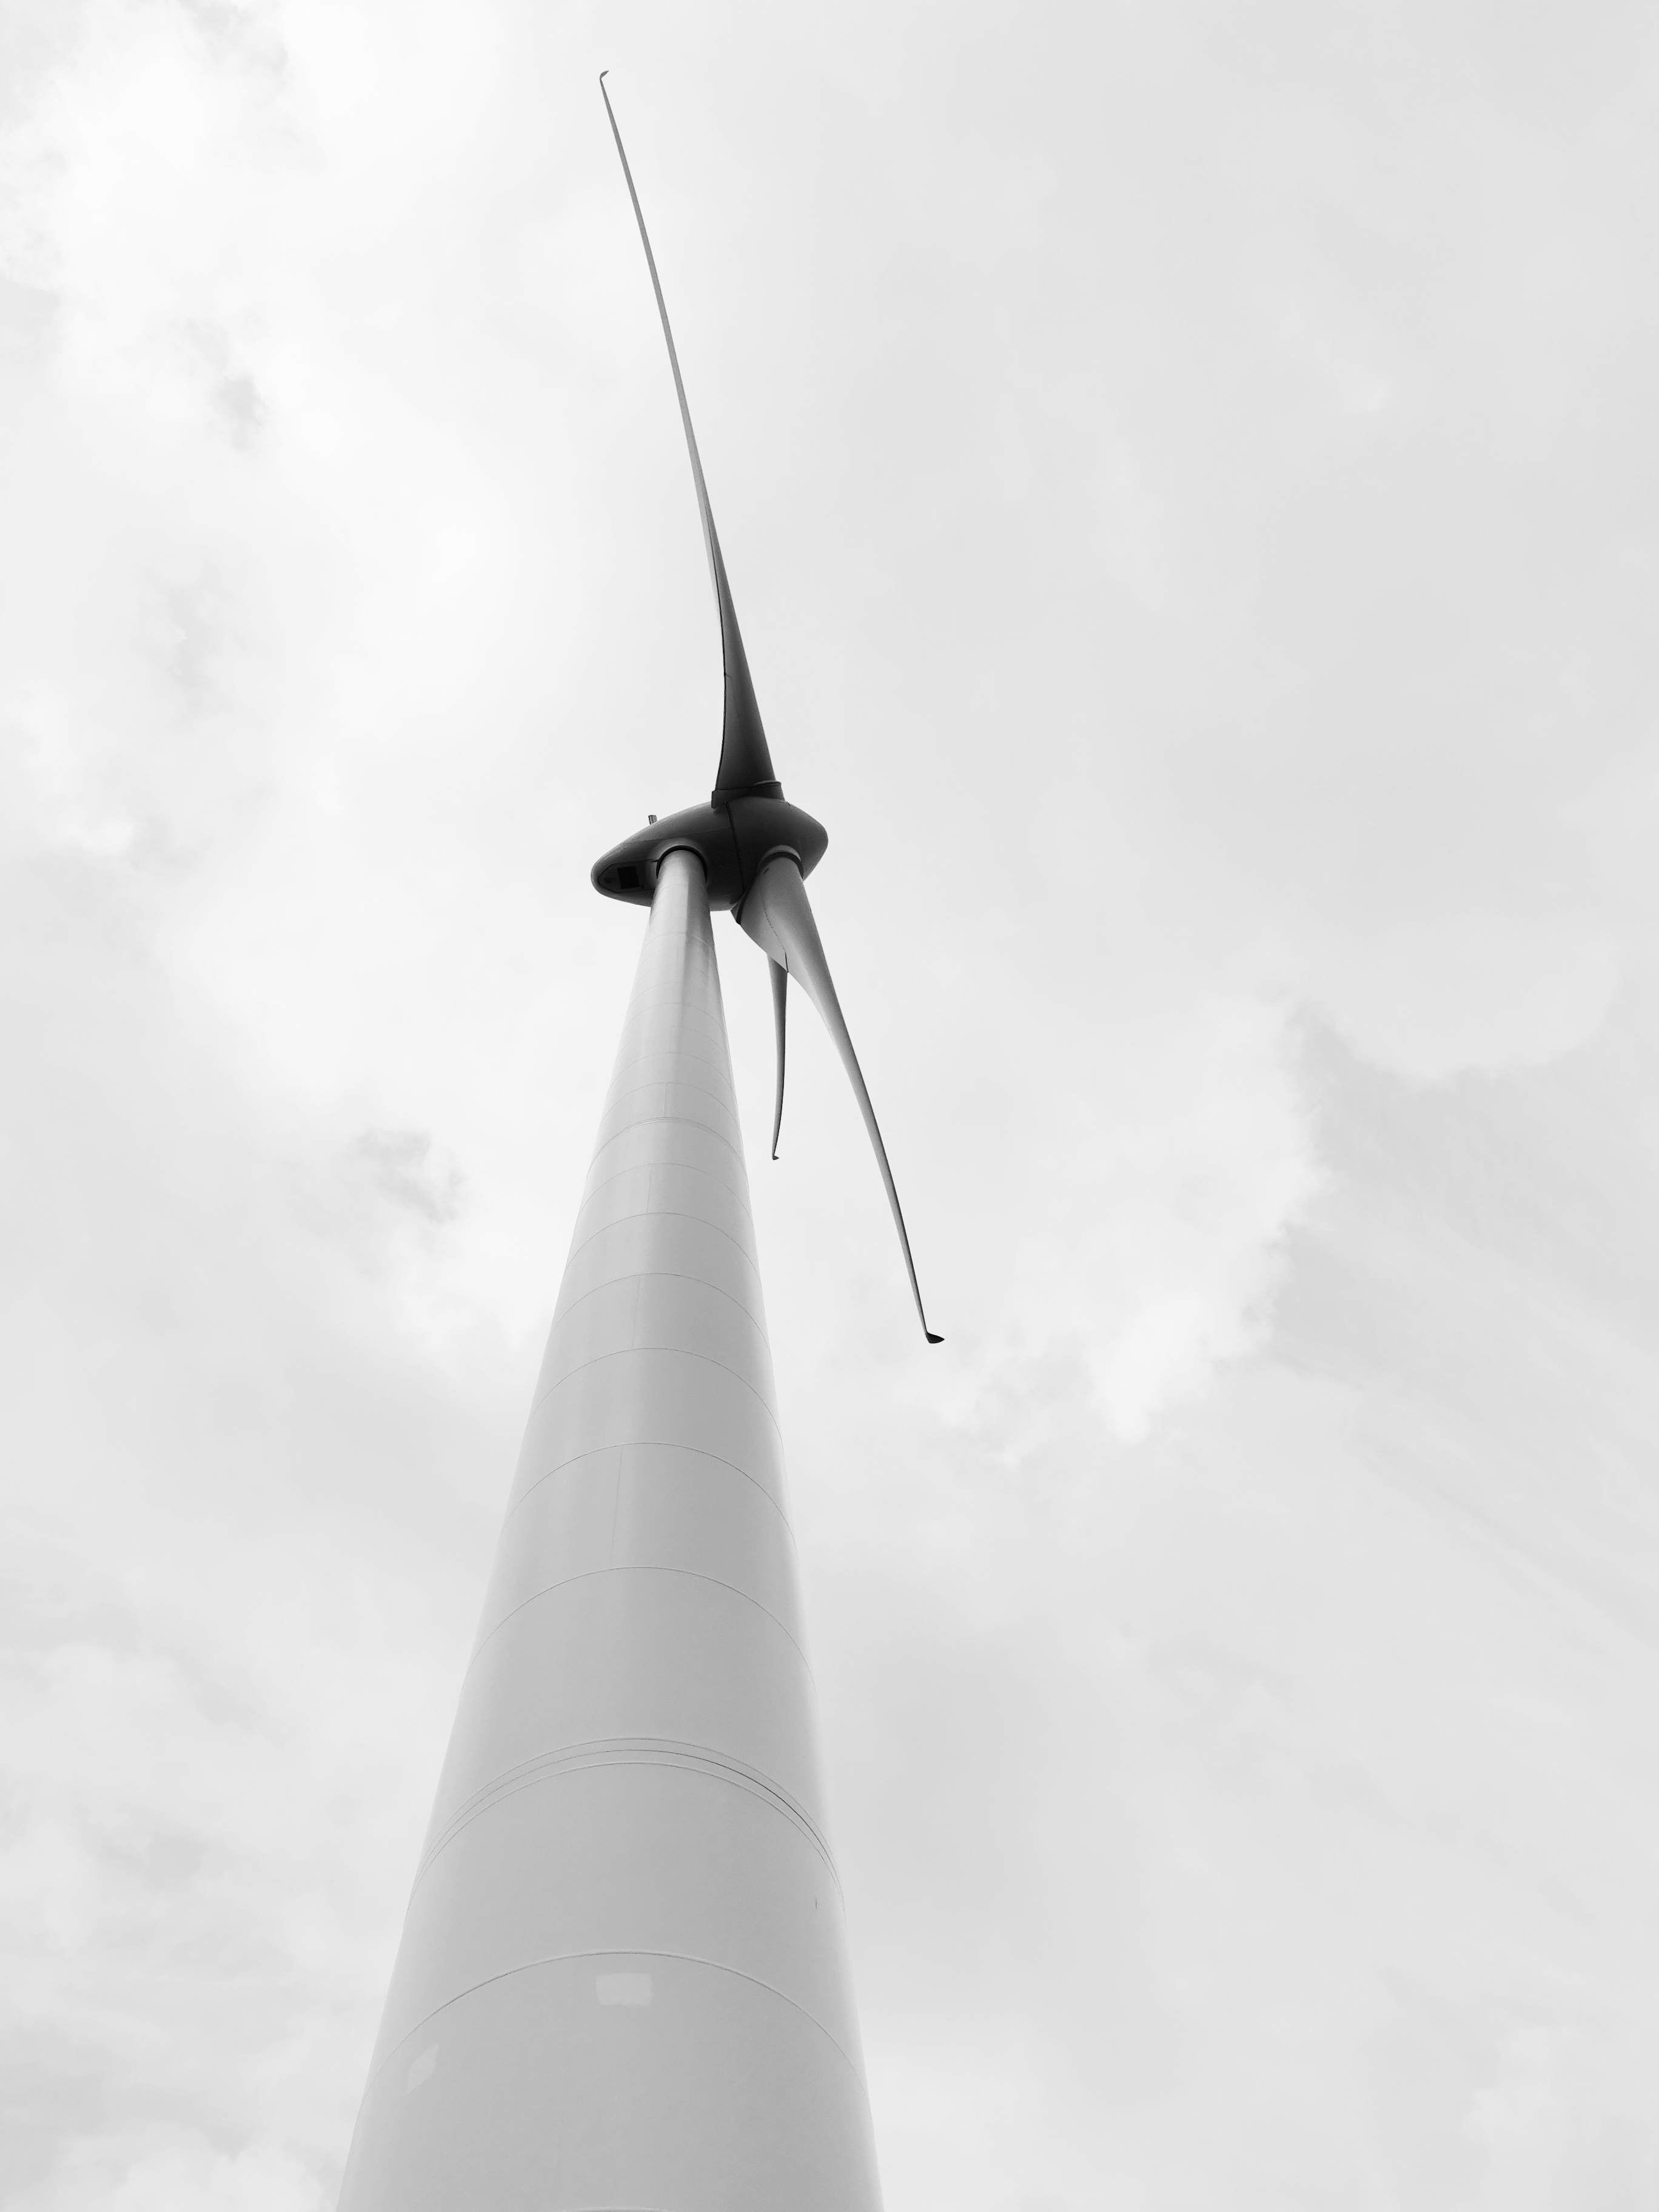 Wind turbine at Marston Forest Centre